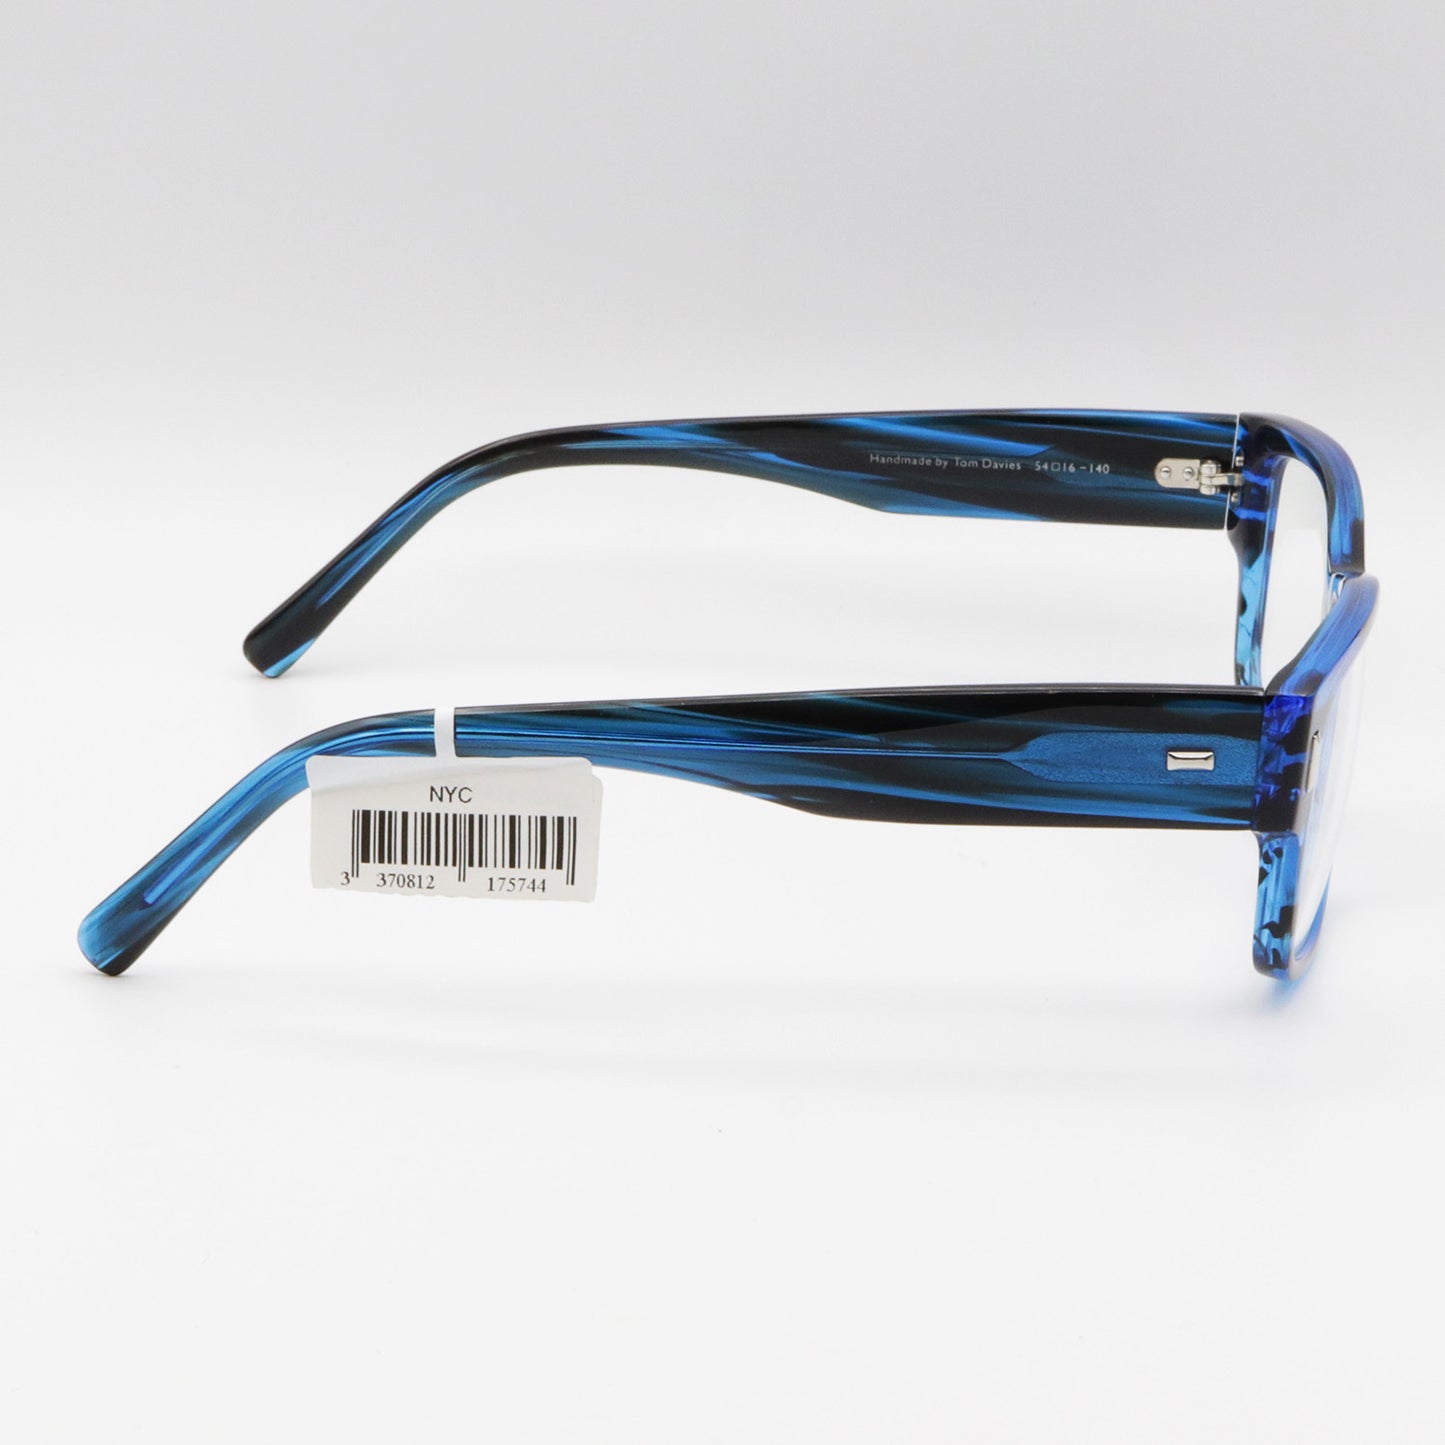 TD510 1533 Tom Davies Blue and Black Optical Glasses